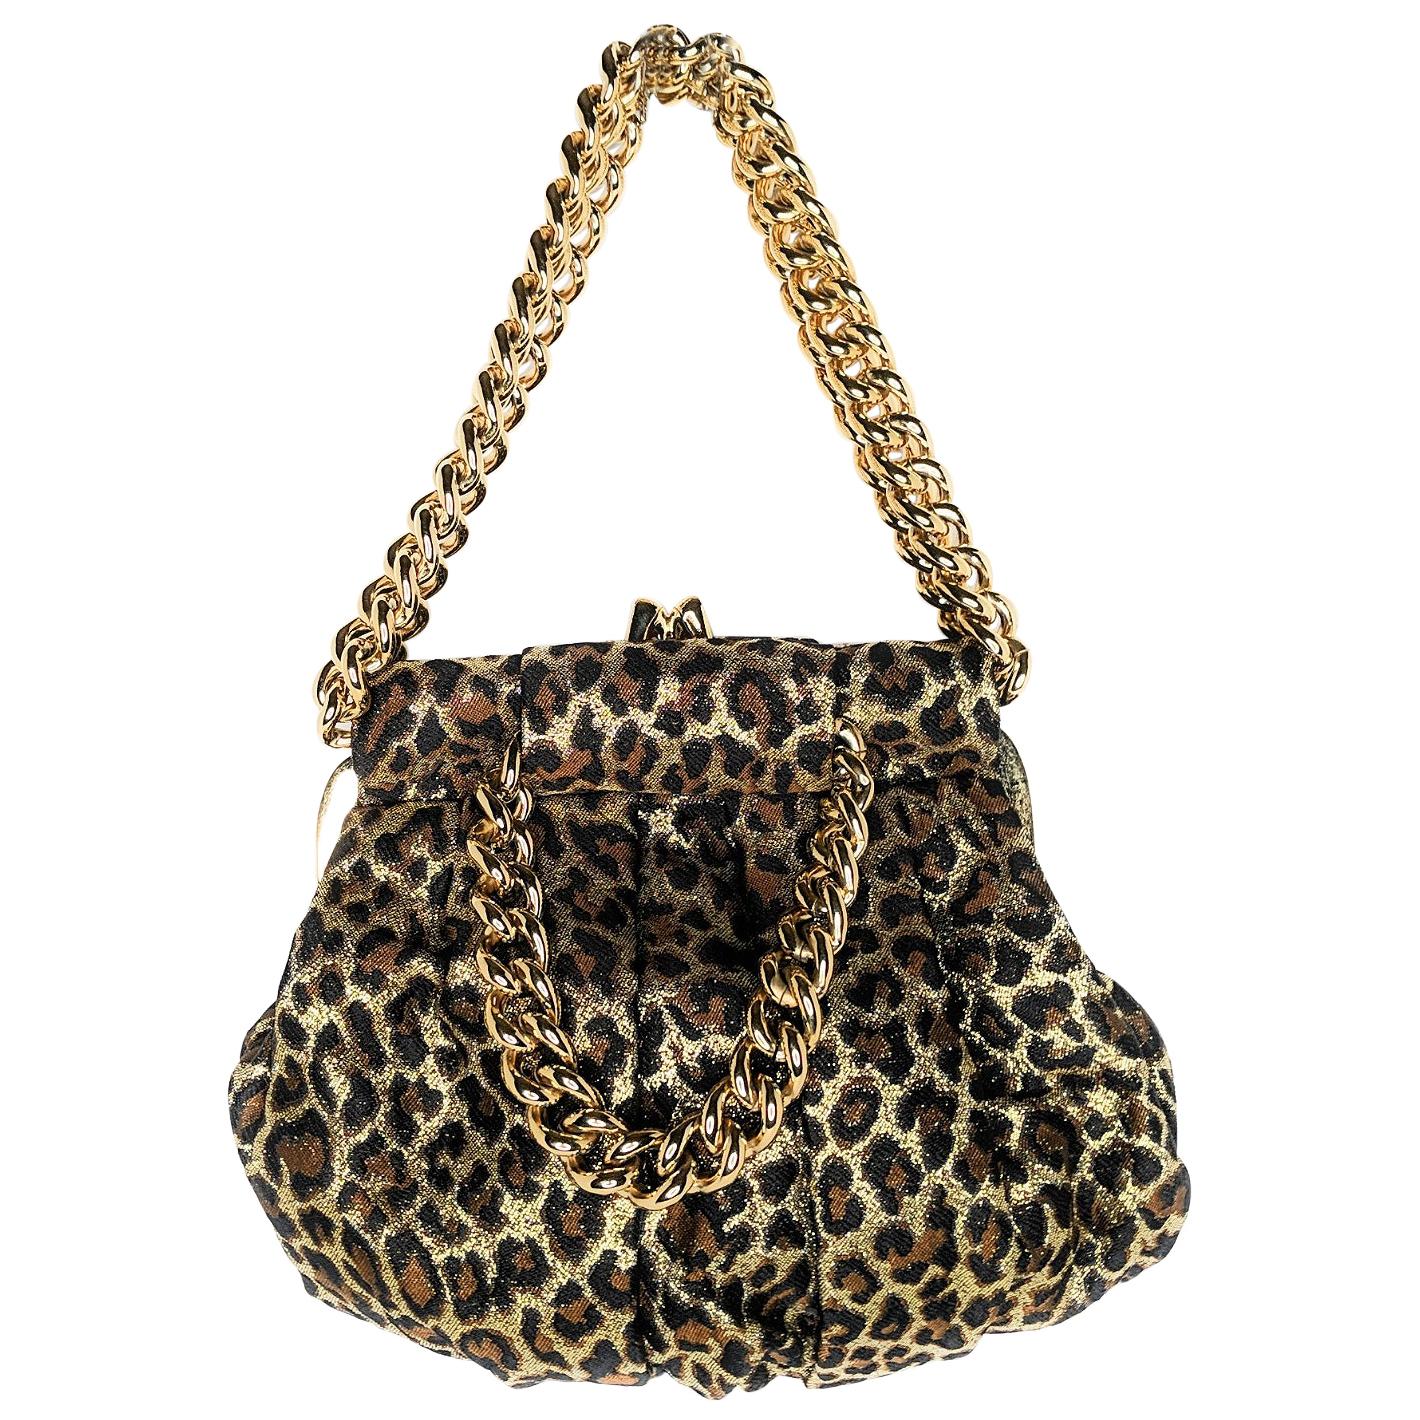 Christian Louboutin Satin Exterior Clutch Bags & Handbags for